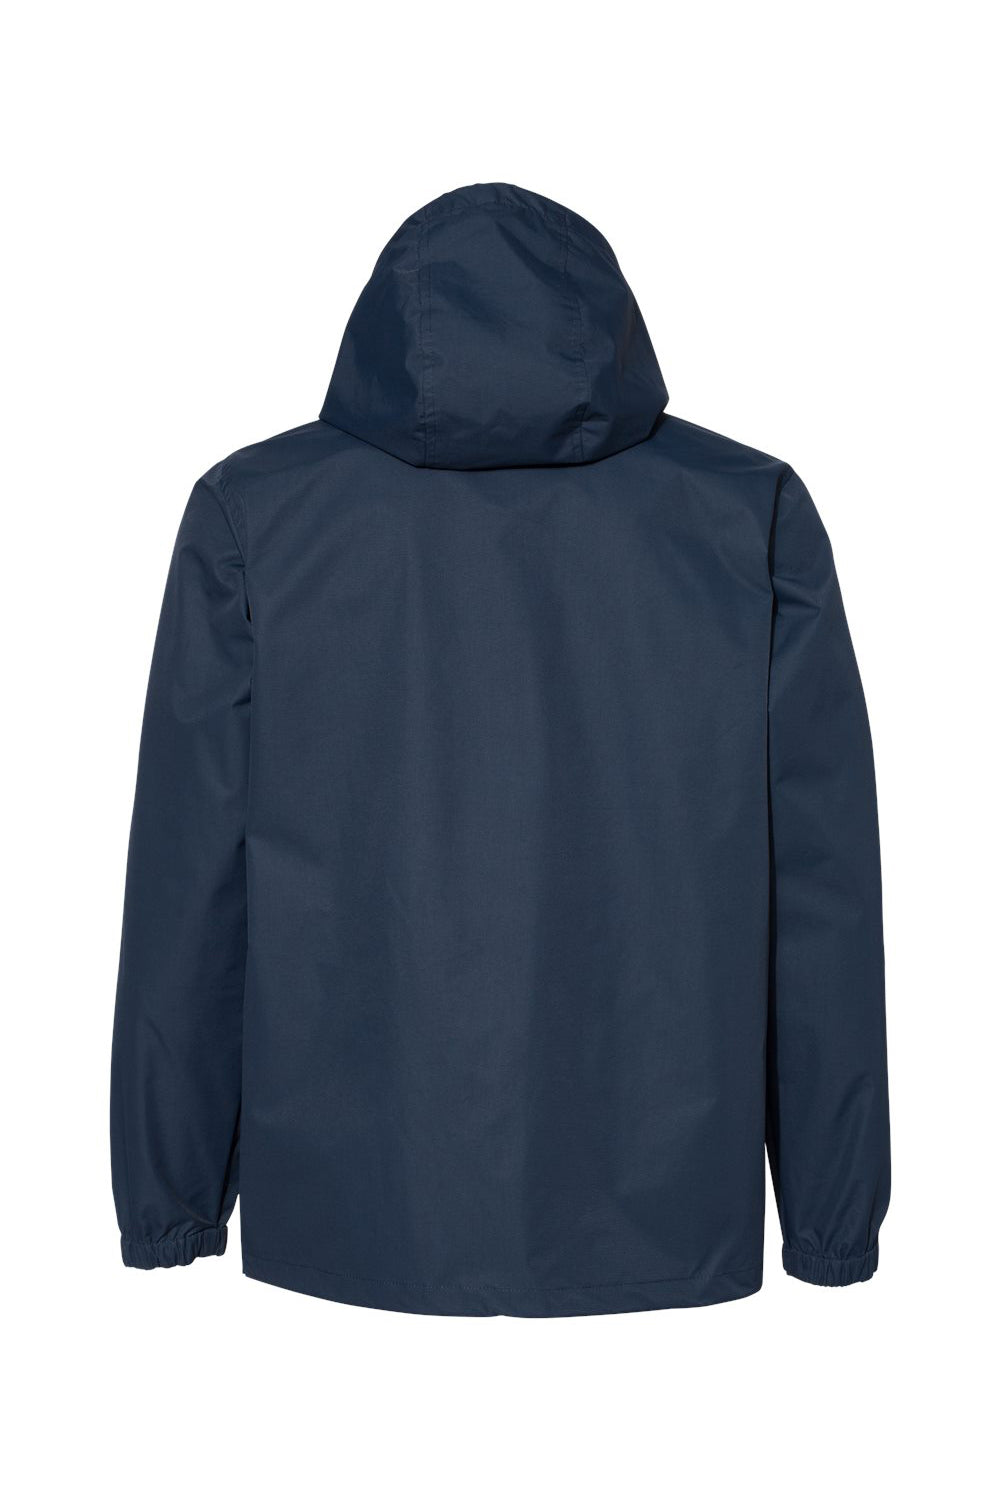 Independent Trading Co. EXP94NAW Mens Nylon Hooded Anorak Jacket Classic Navy Blue Flat Back